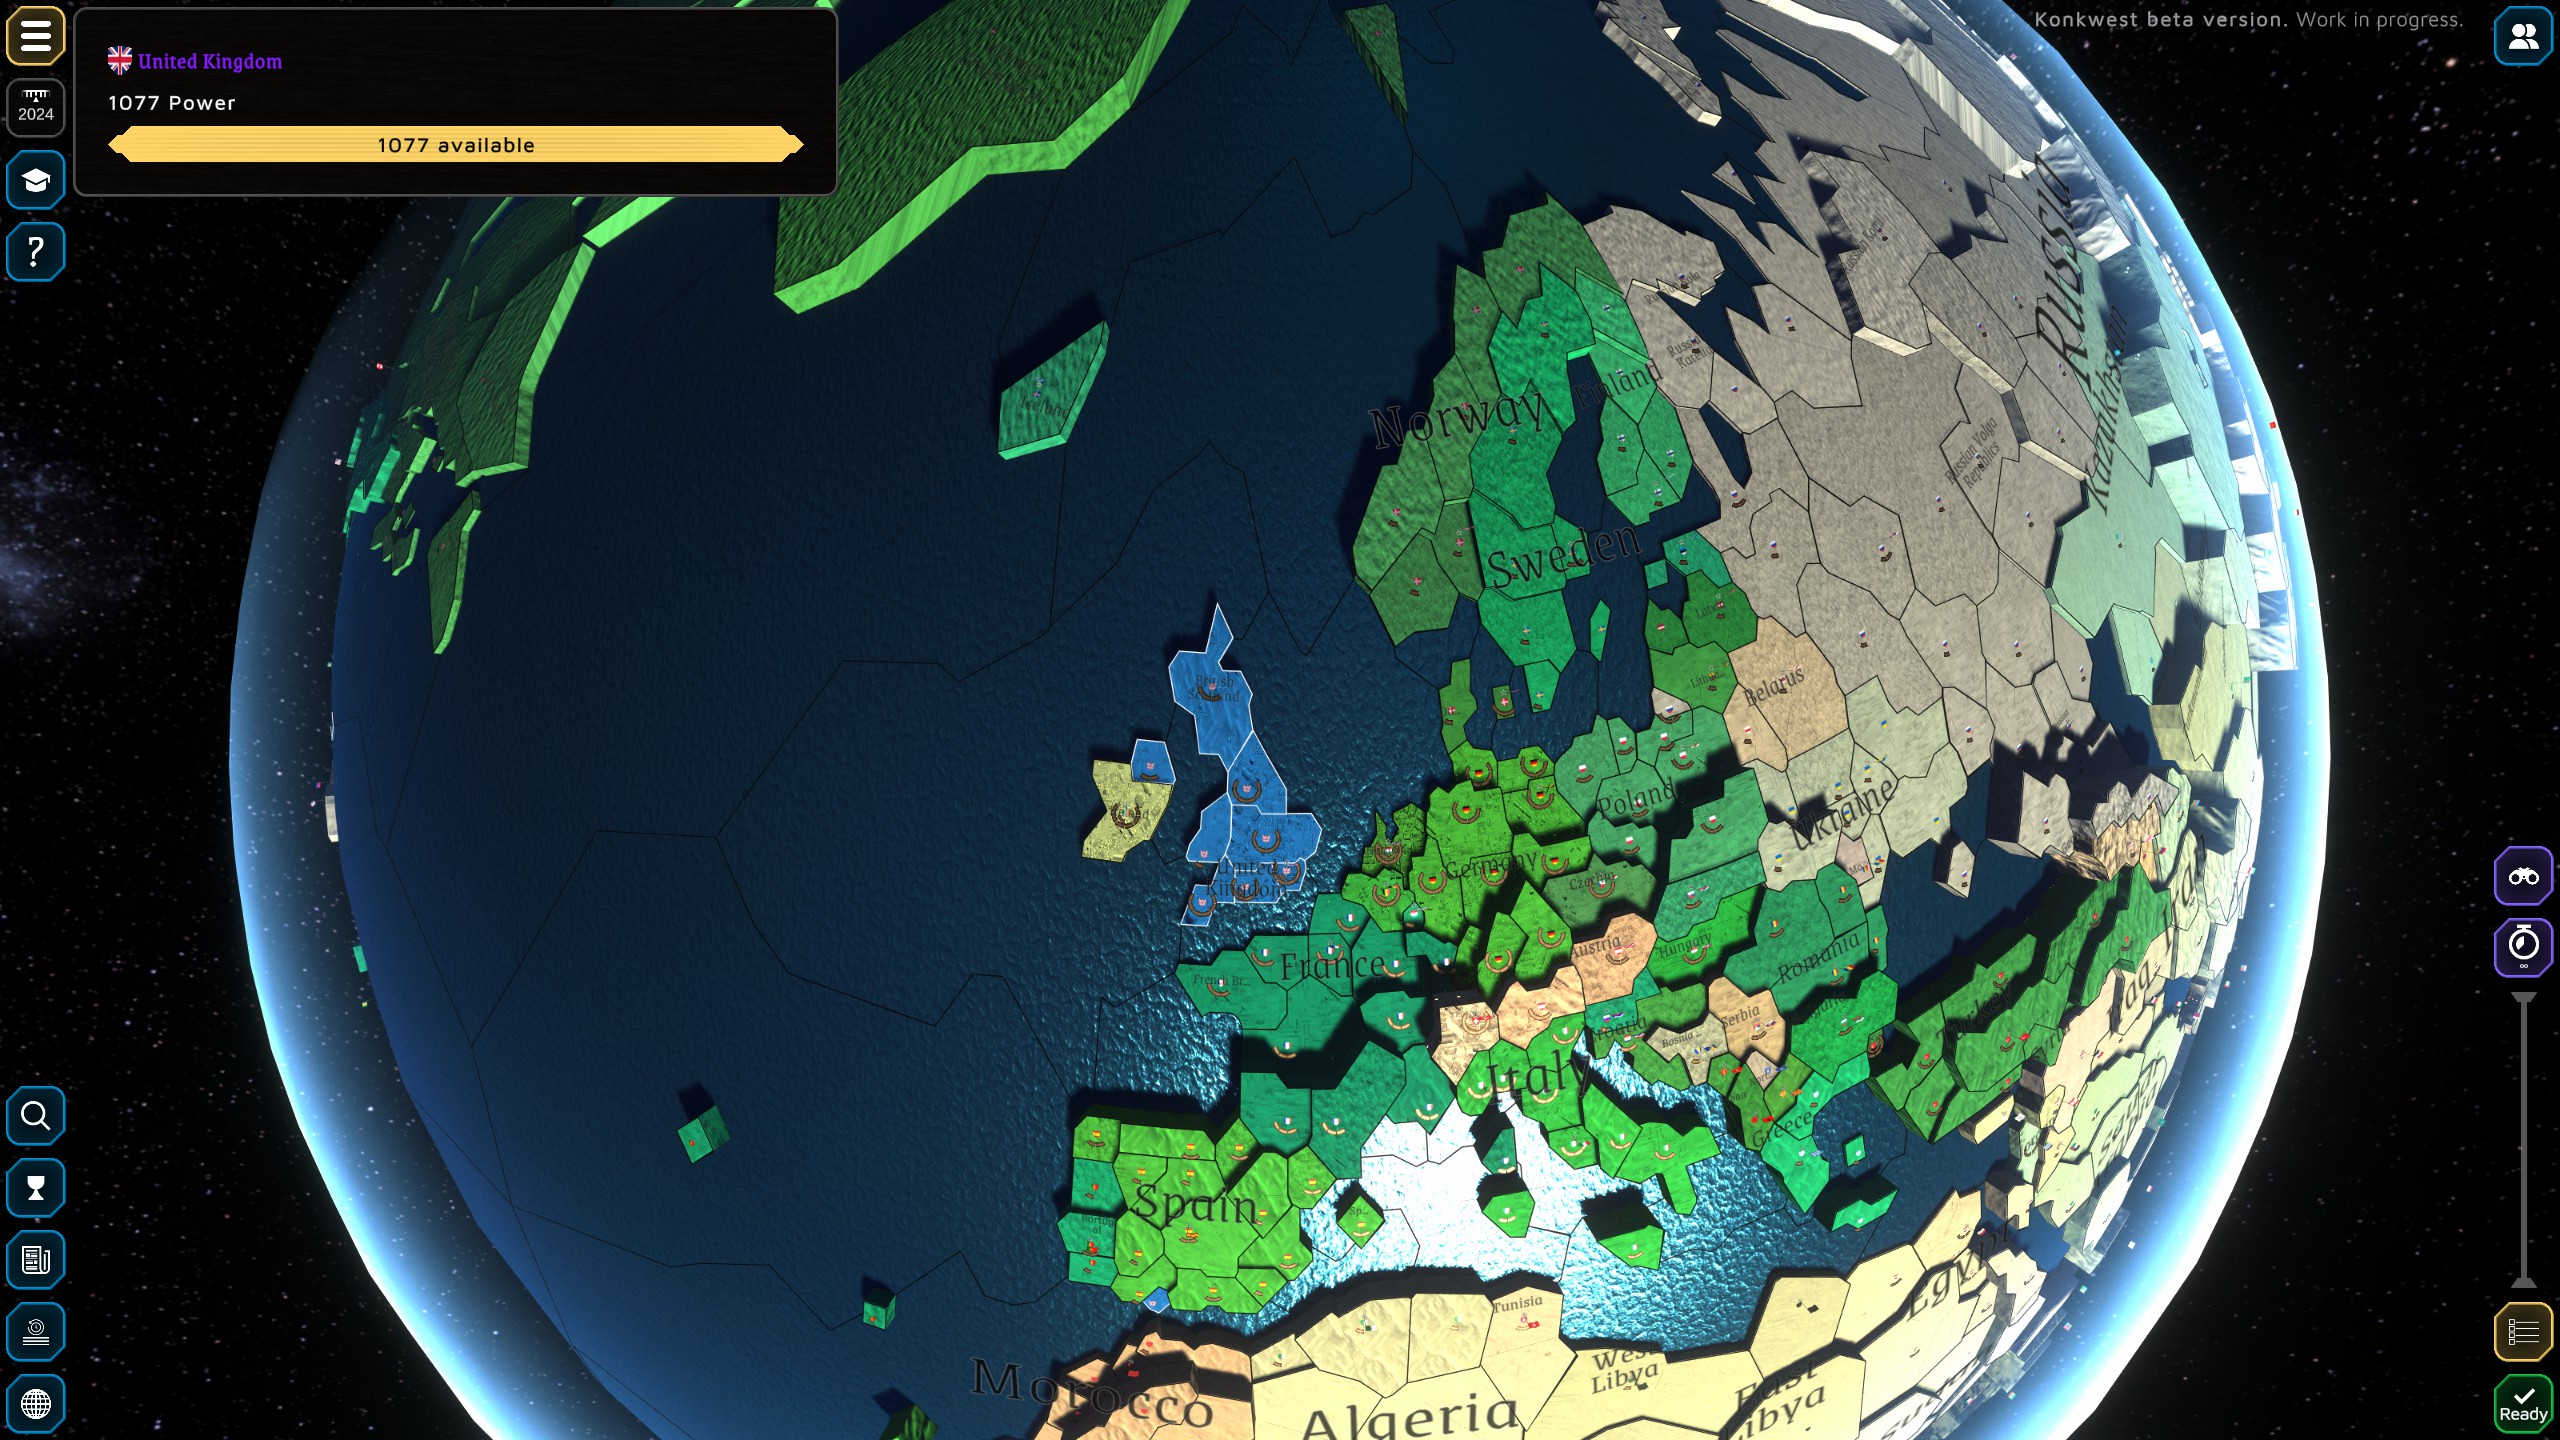 screenshot where the UK's diplomatc map mode is shown